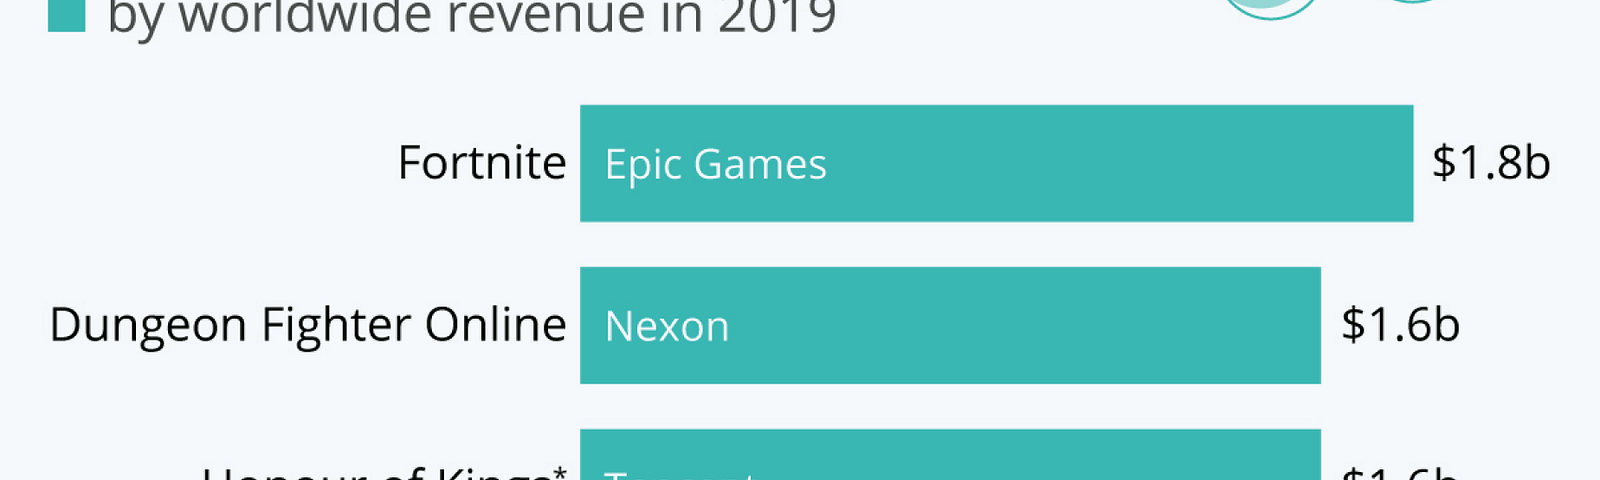 2019's Top 'Free' Games Each Made $1.5 Billion-Plus